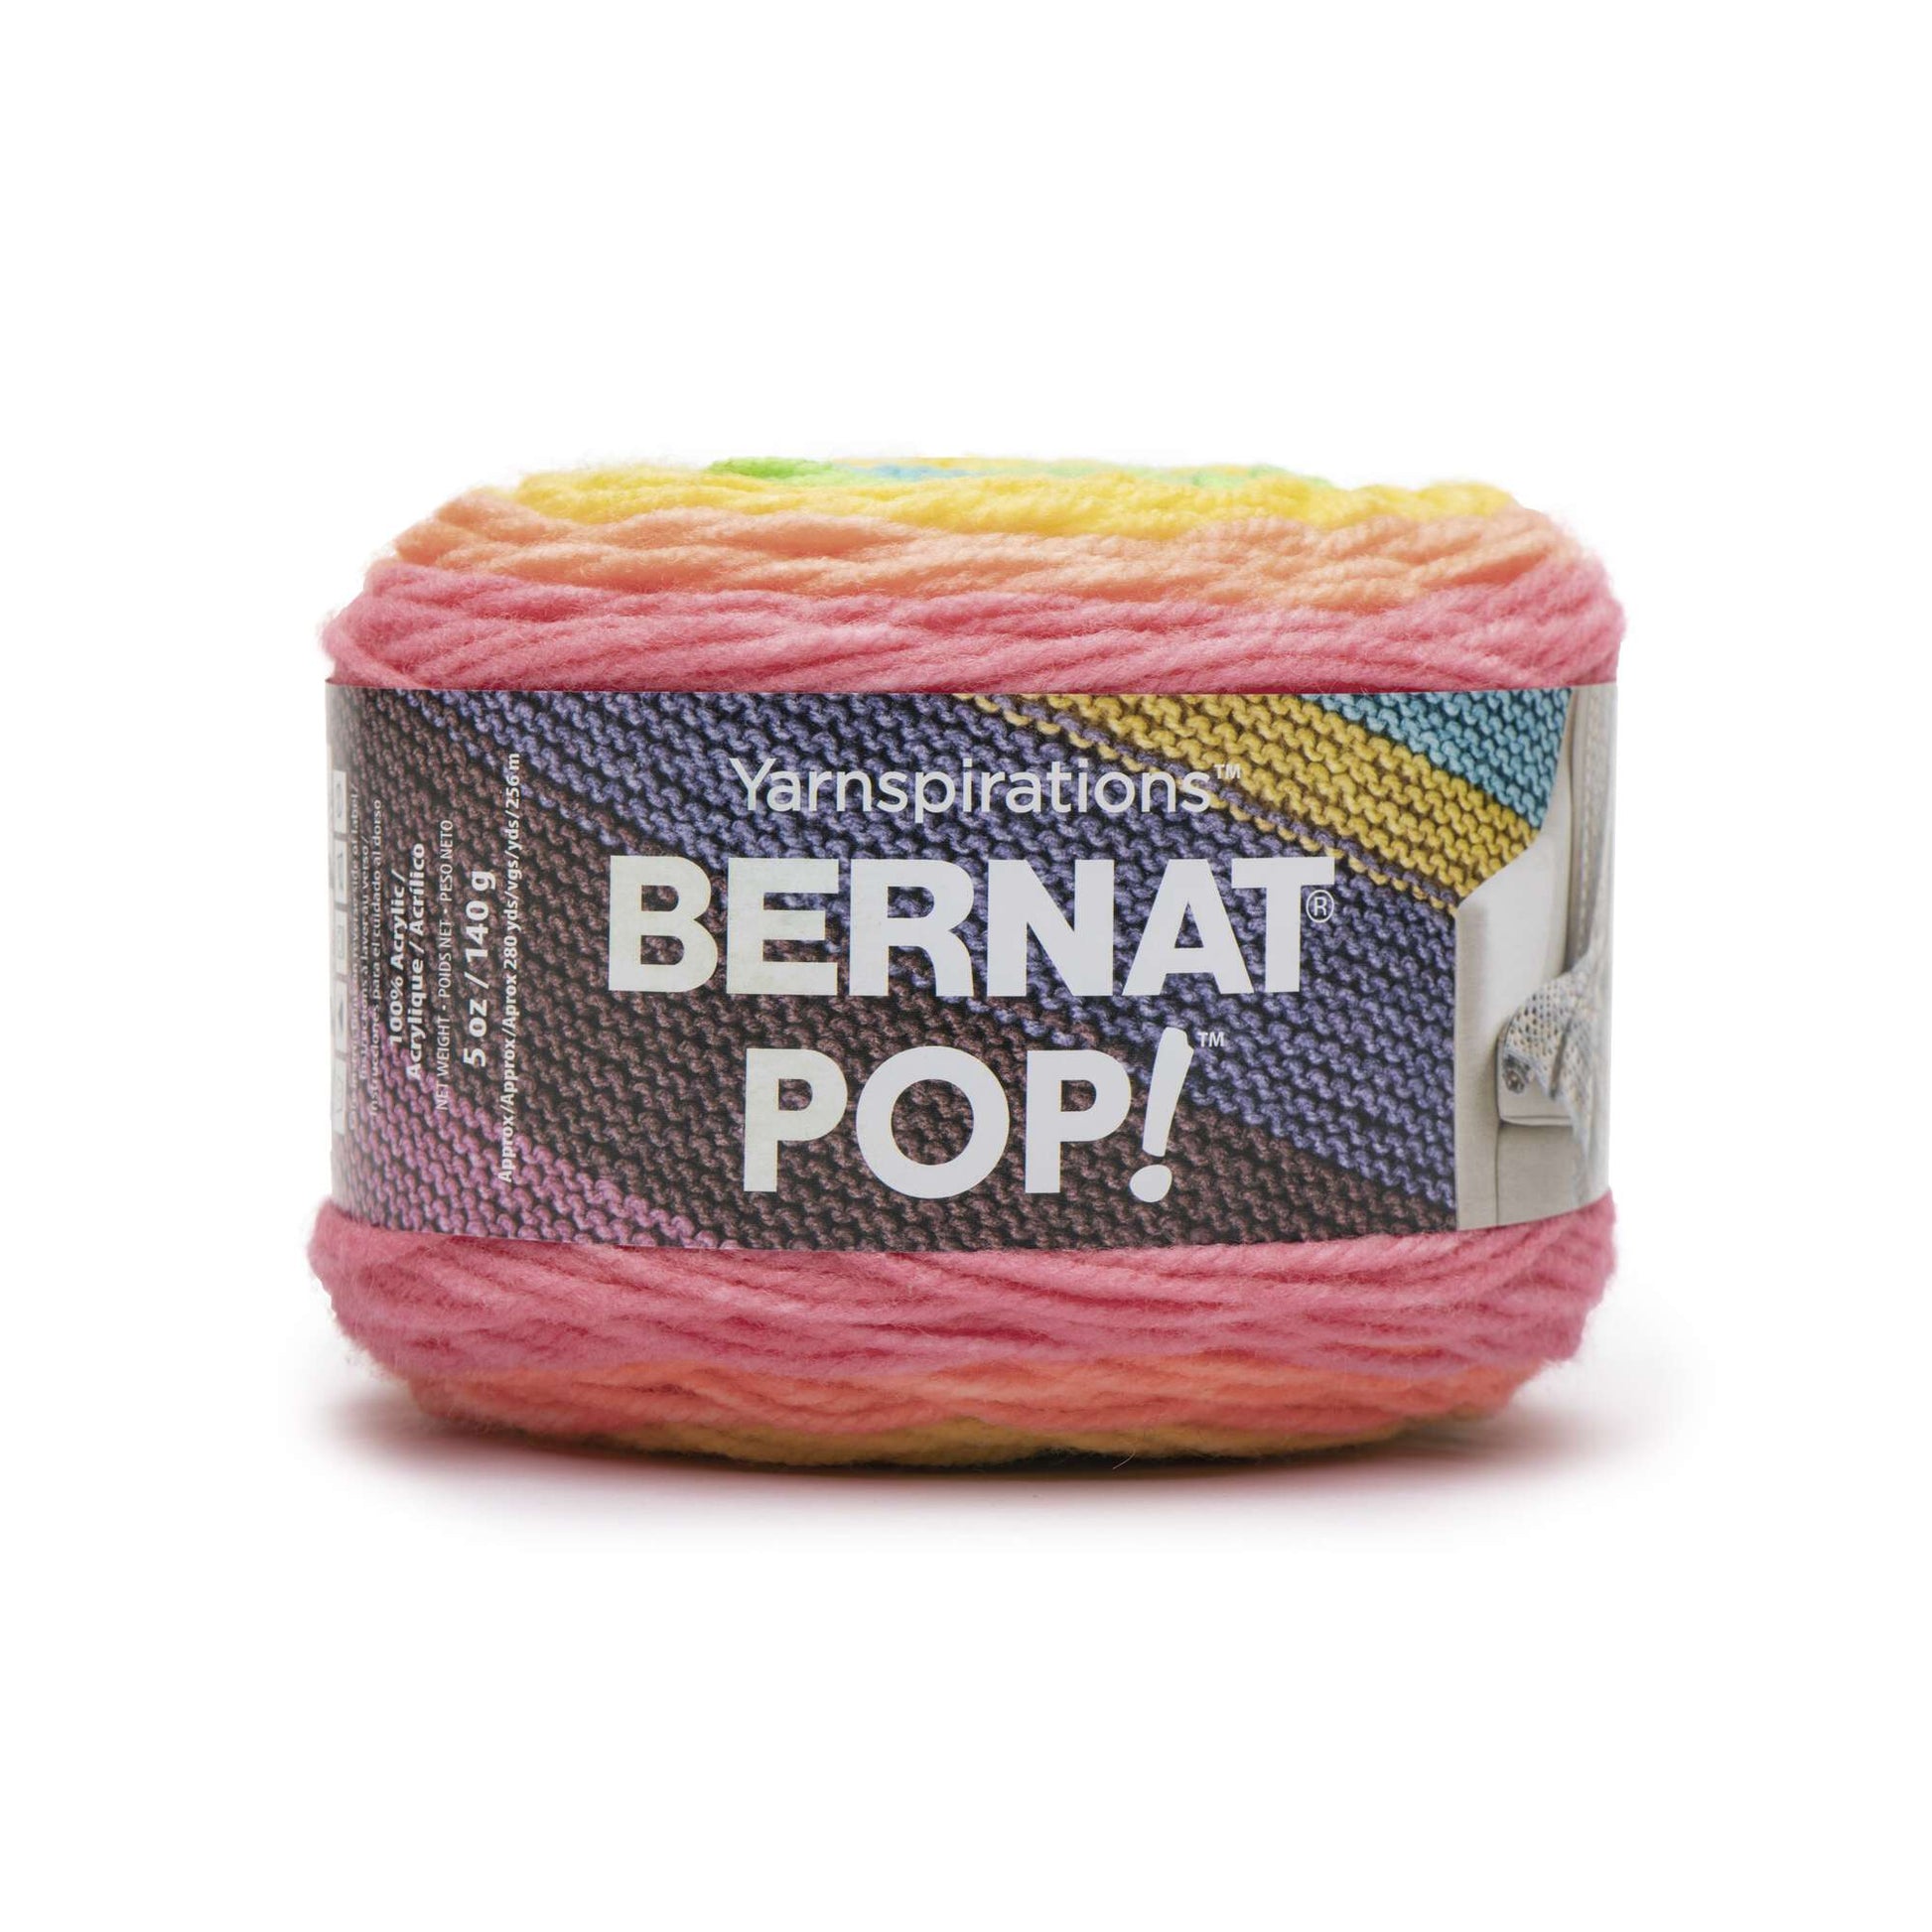 I Love This Yarn - Crisp Air – Mountaintop Yarn